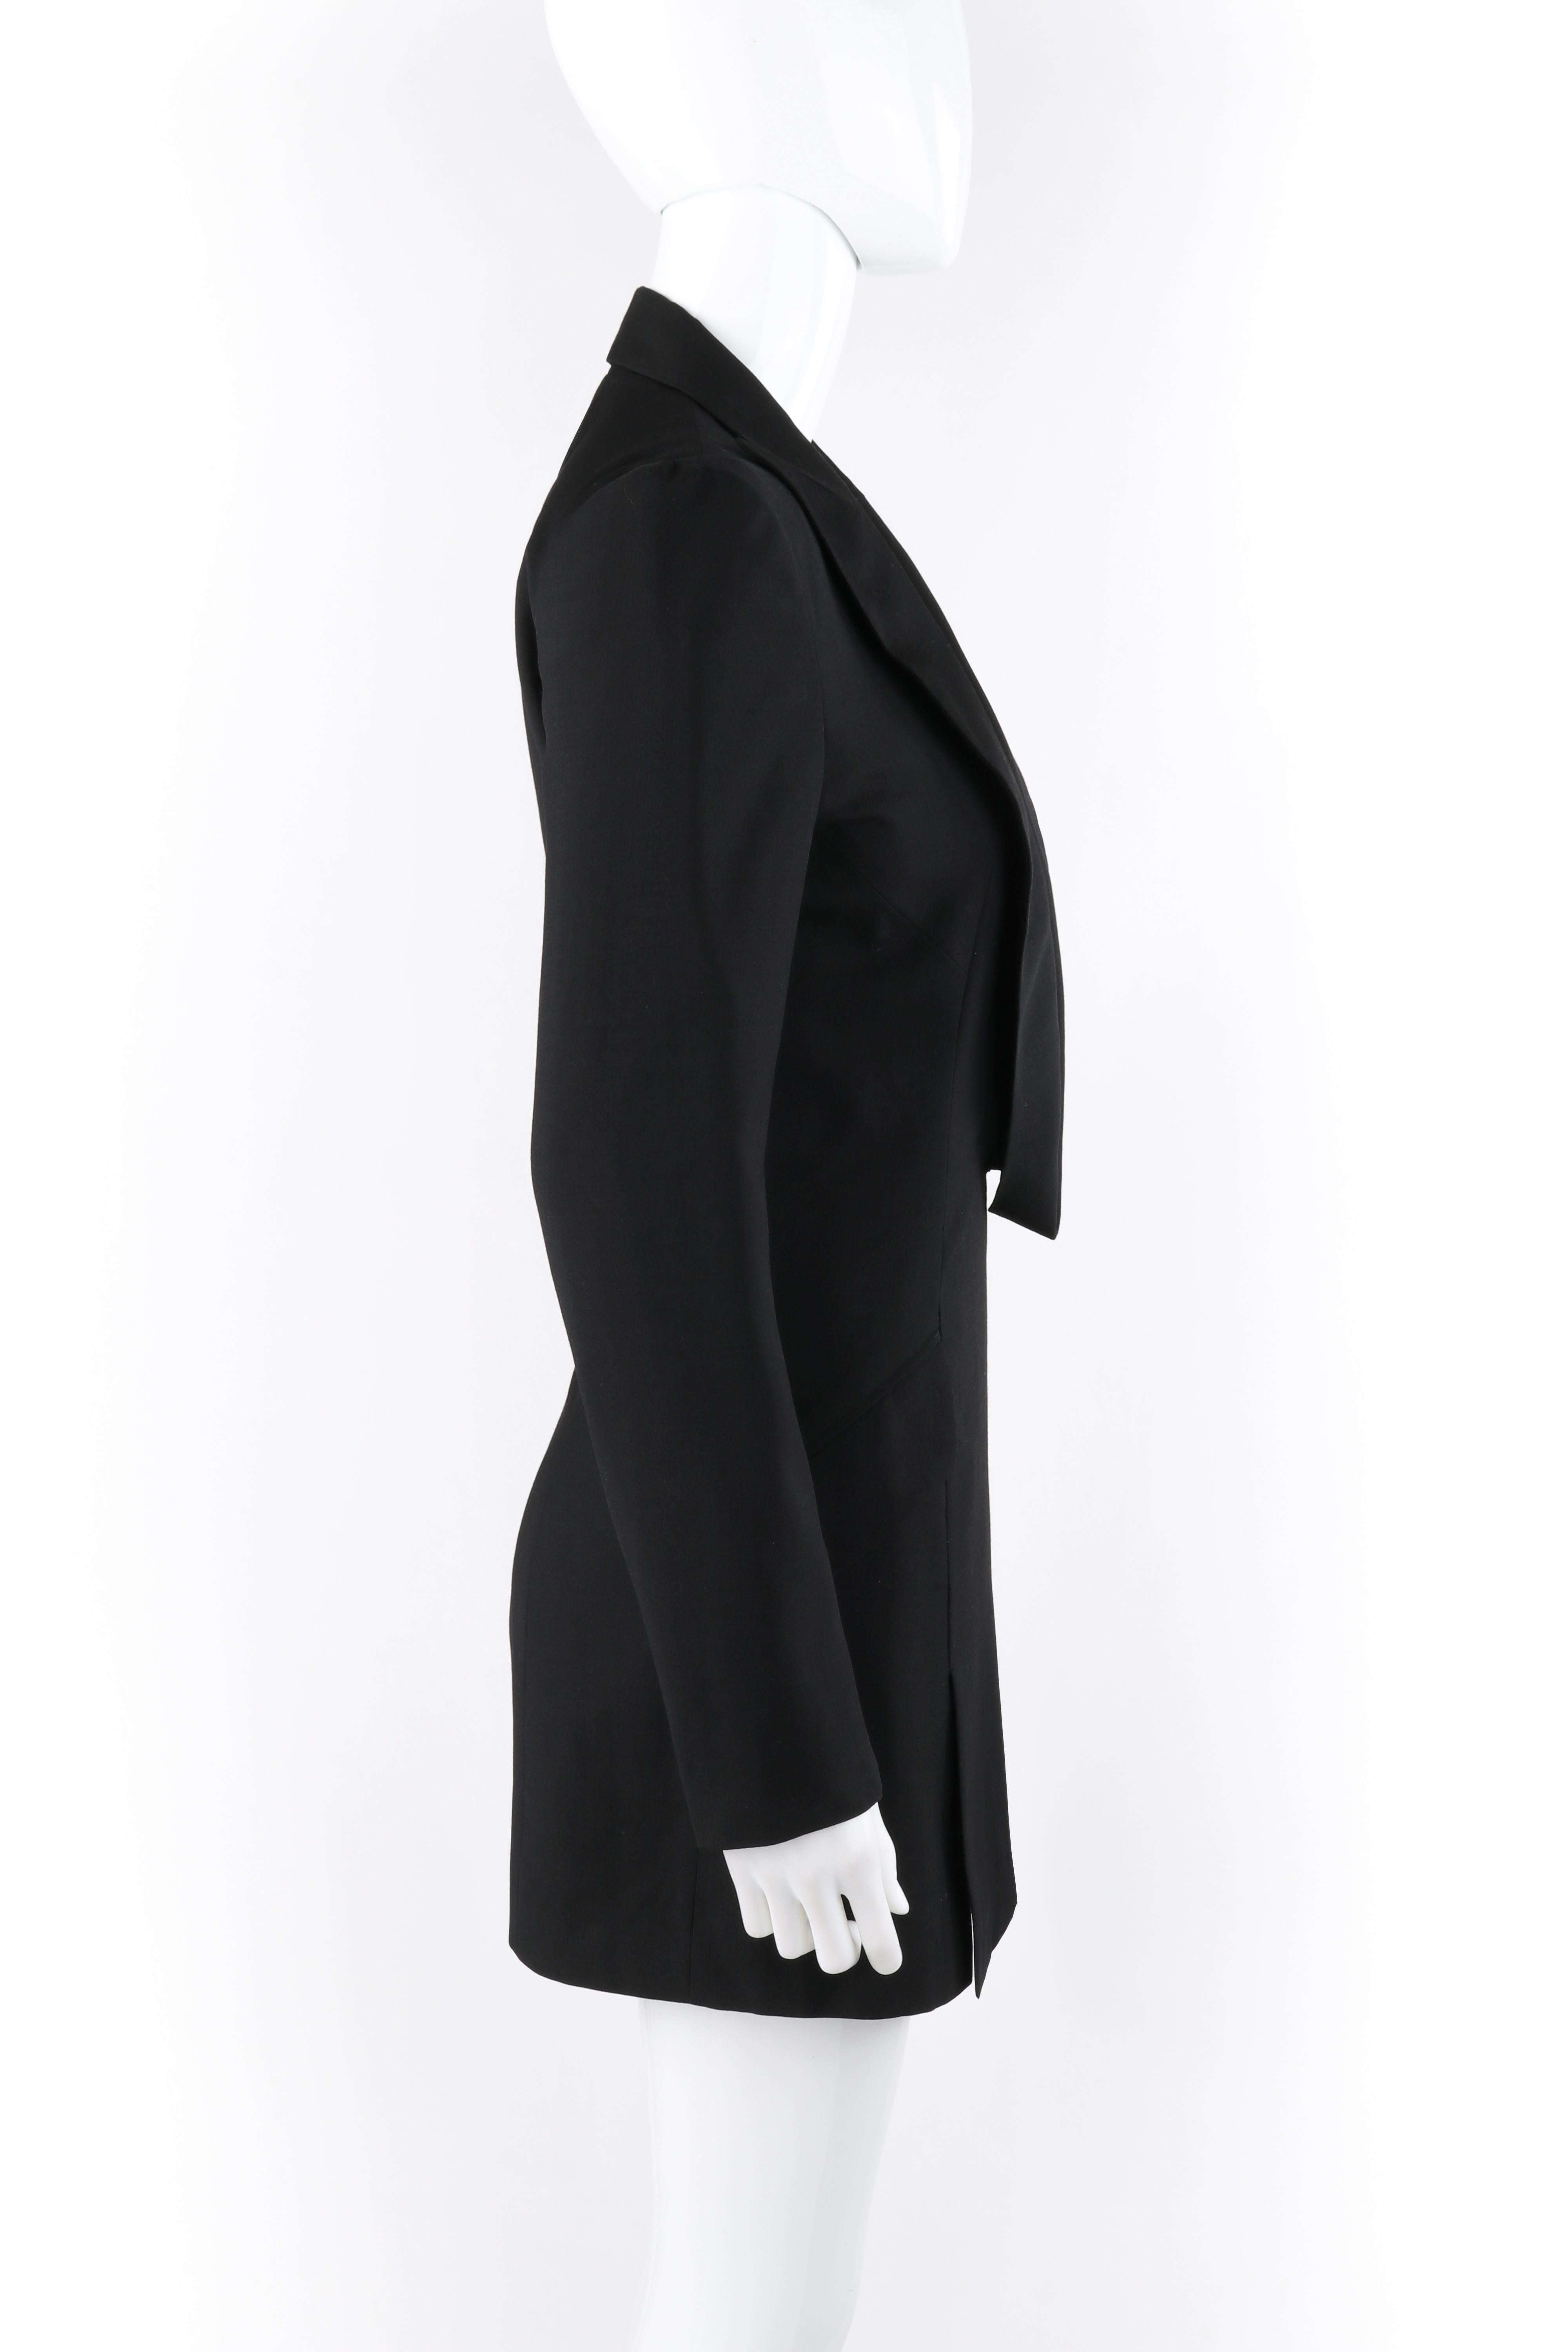 ALEXANDER McQUEEN S/S 1998 “Golden Shower” Plunge Neck Micro Mini Tuxedo Dress In Good Condition For Sale In Thiensville, WI